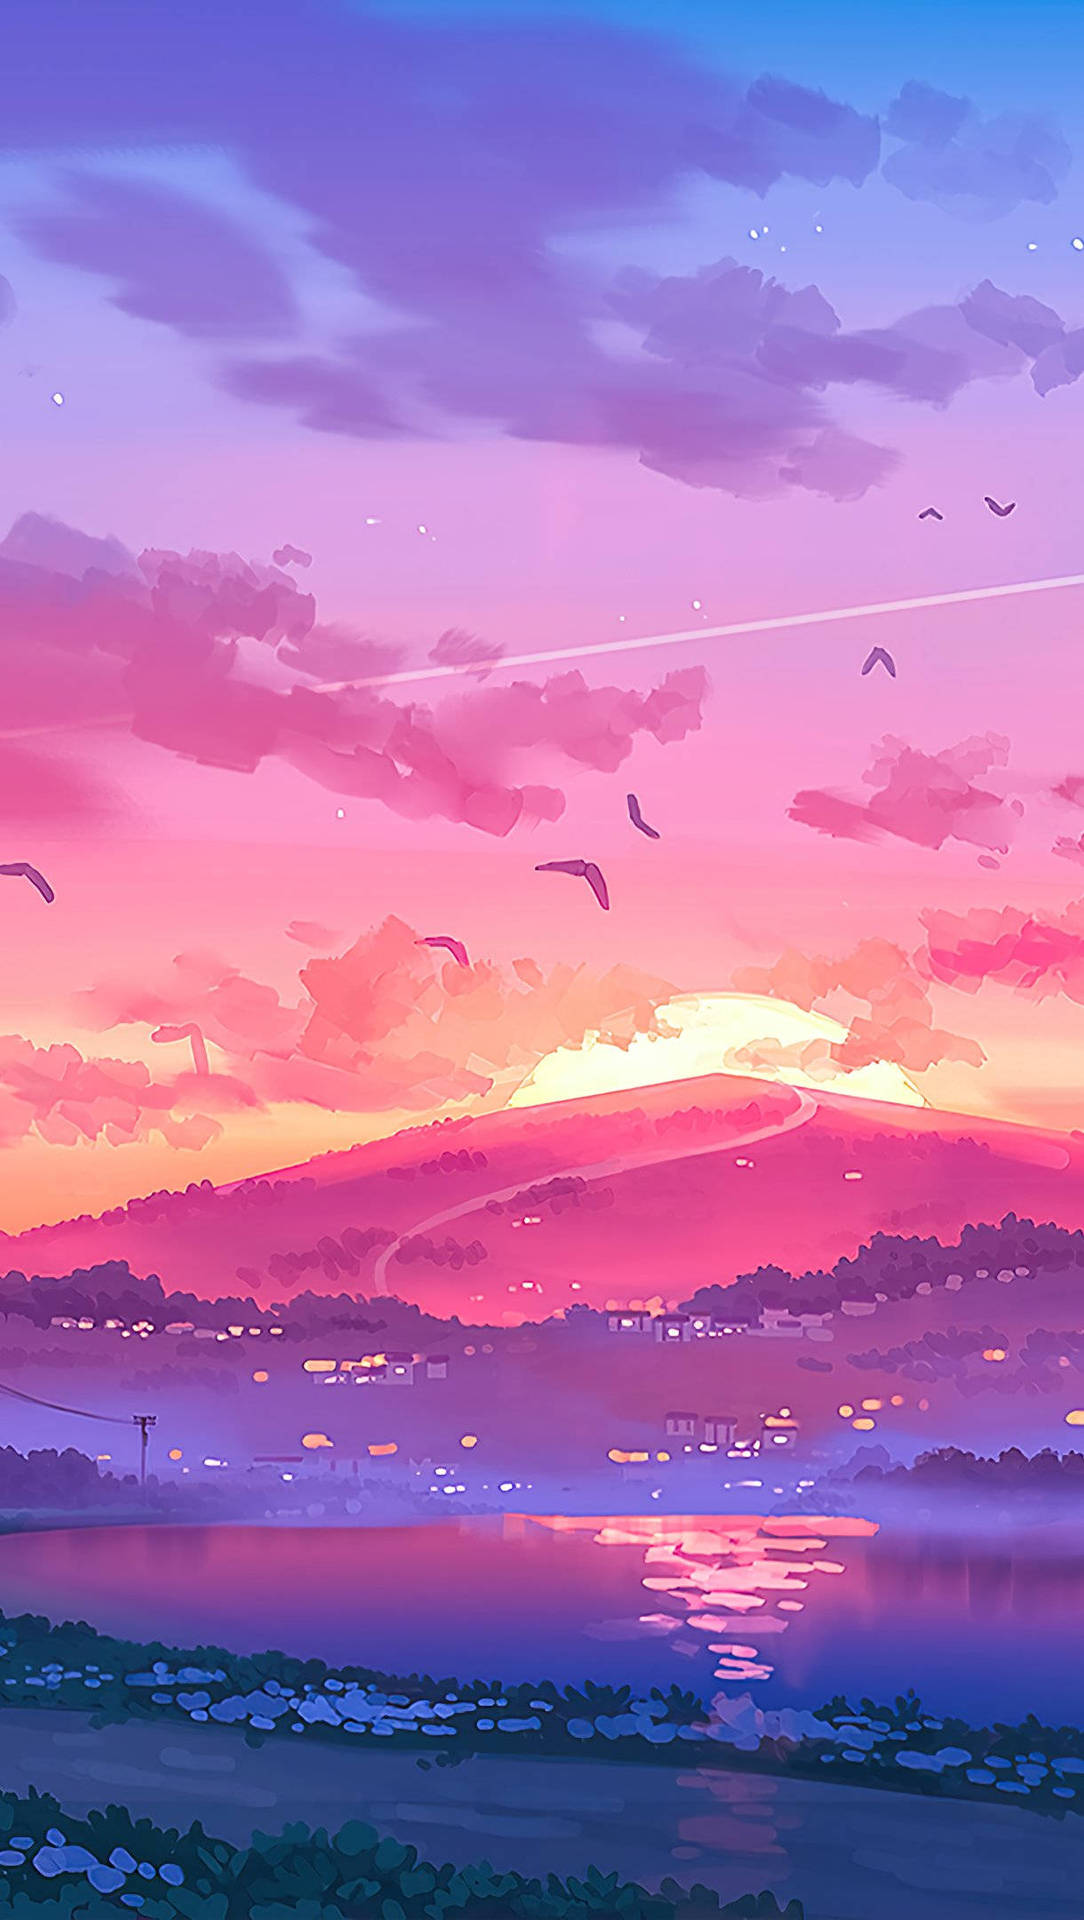 A calming sunset that brings a sense of peace Wallpaper